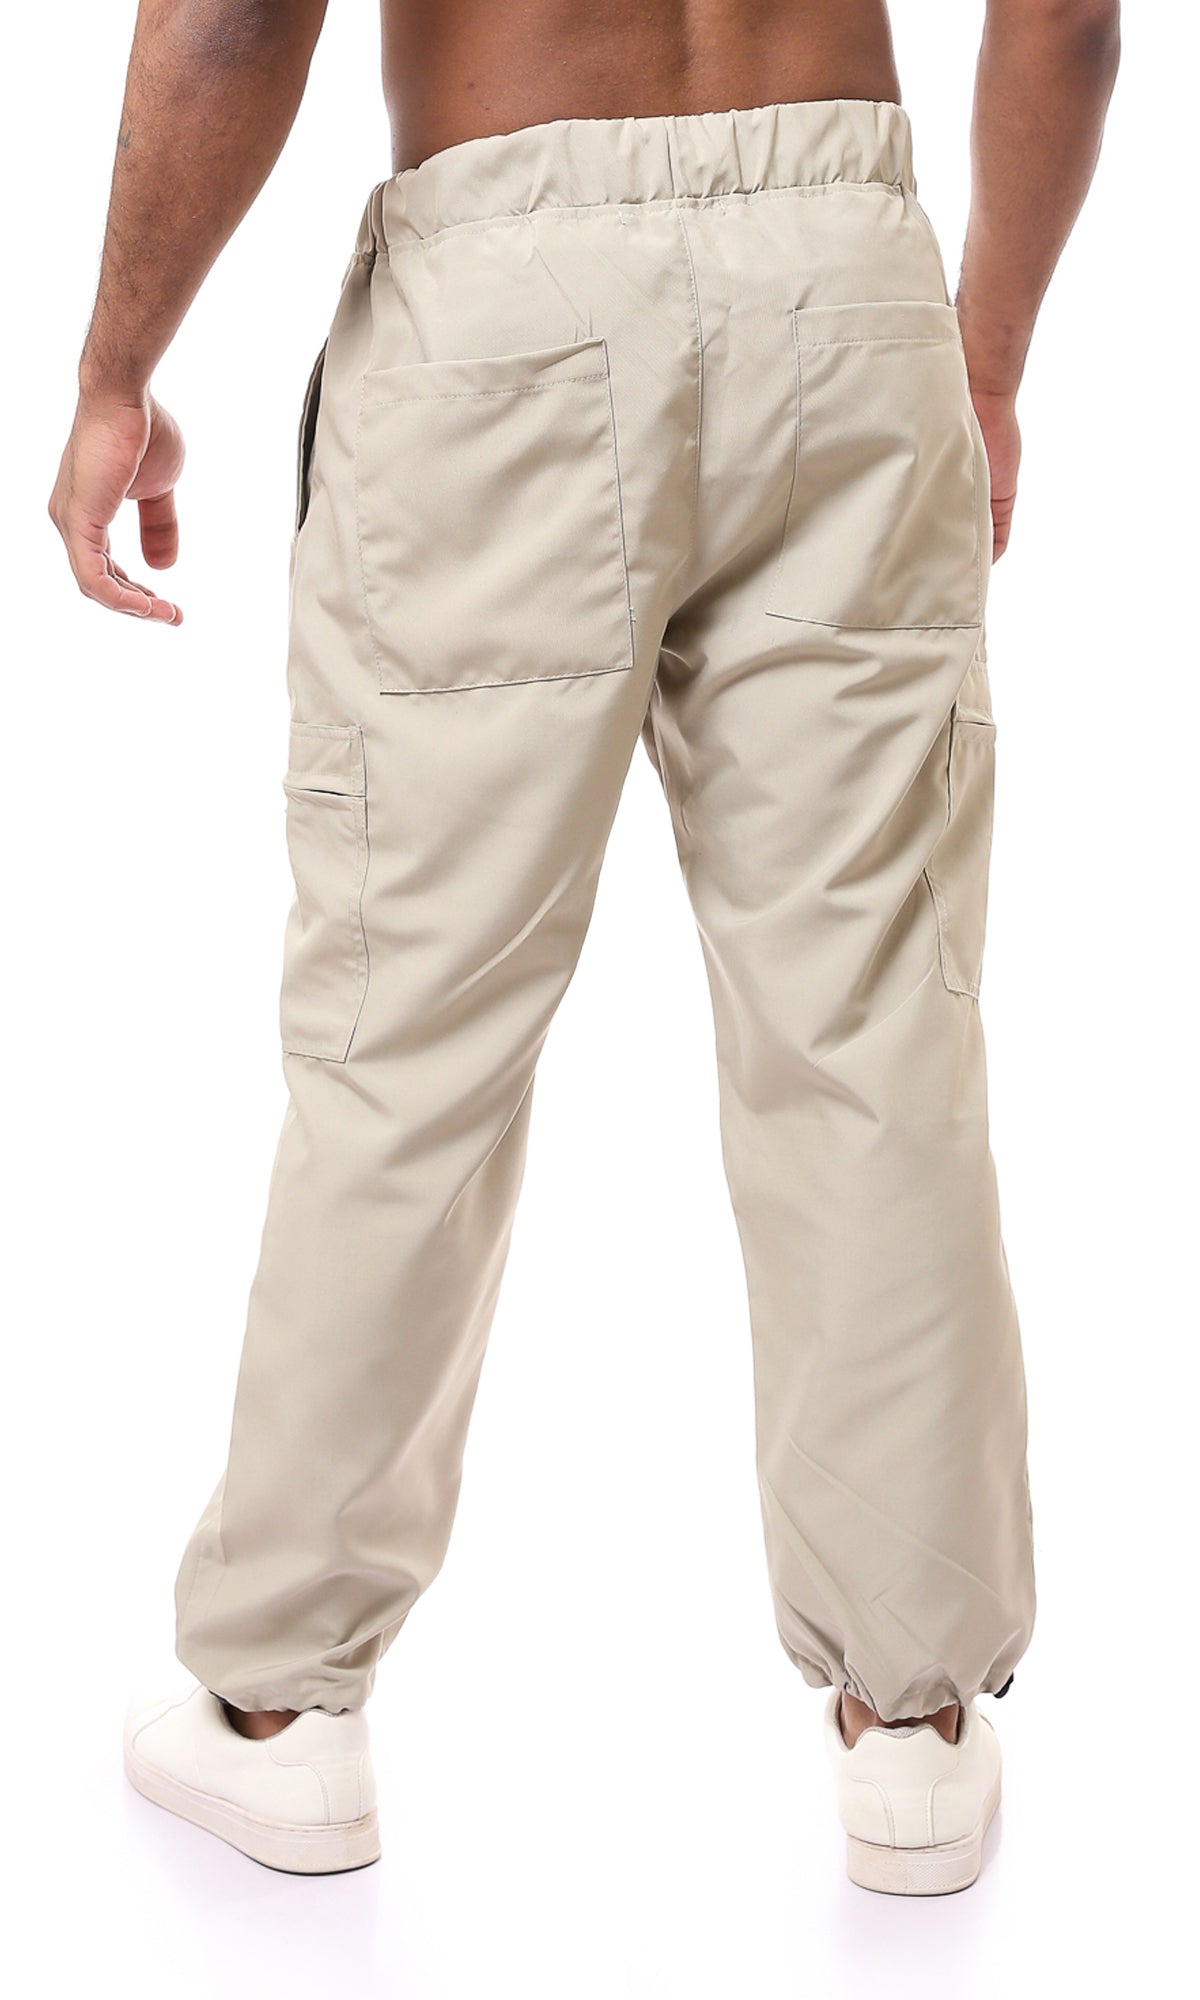 O167936 Slip On Casual Beige Pants With Adjustable Hem